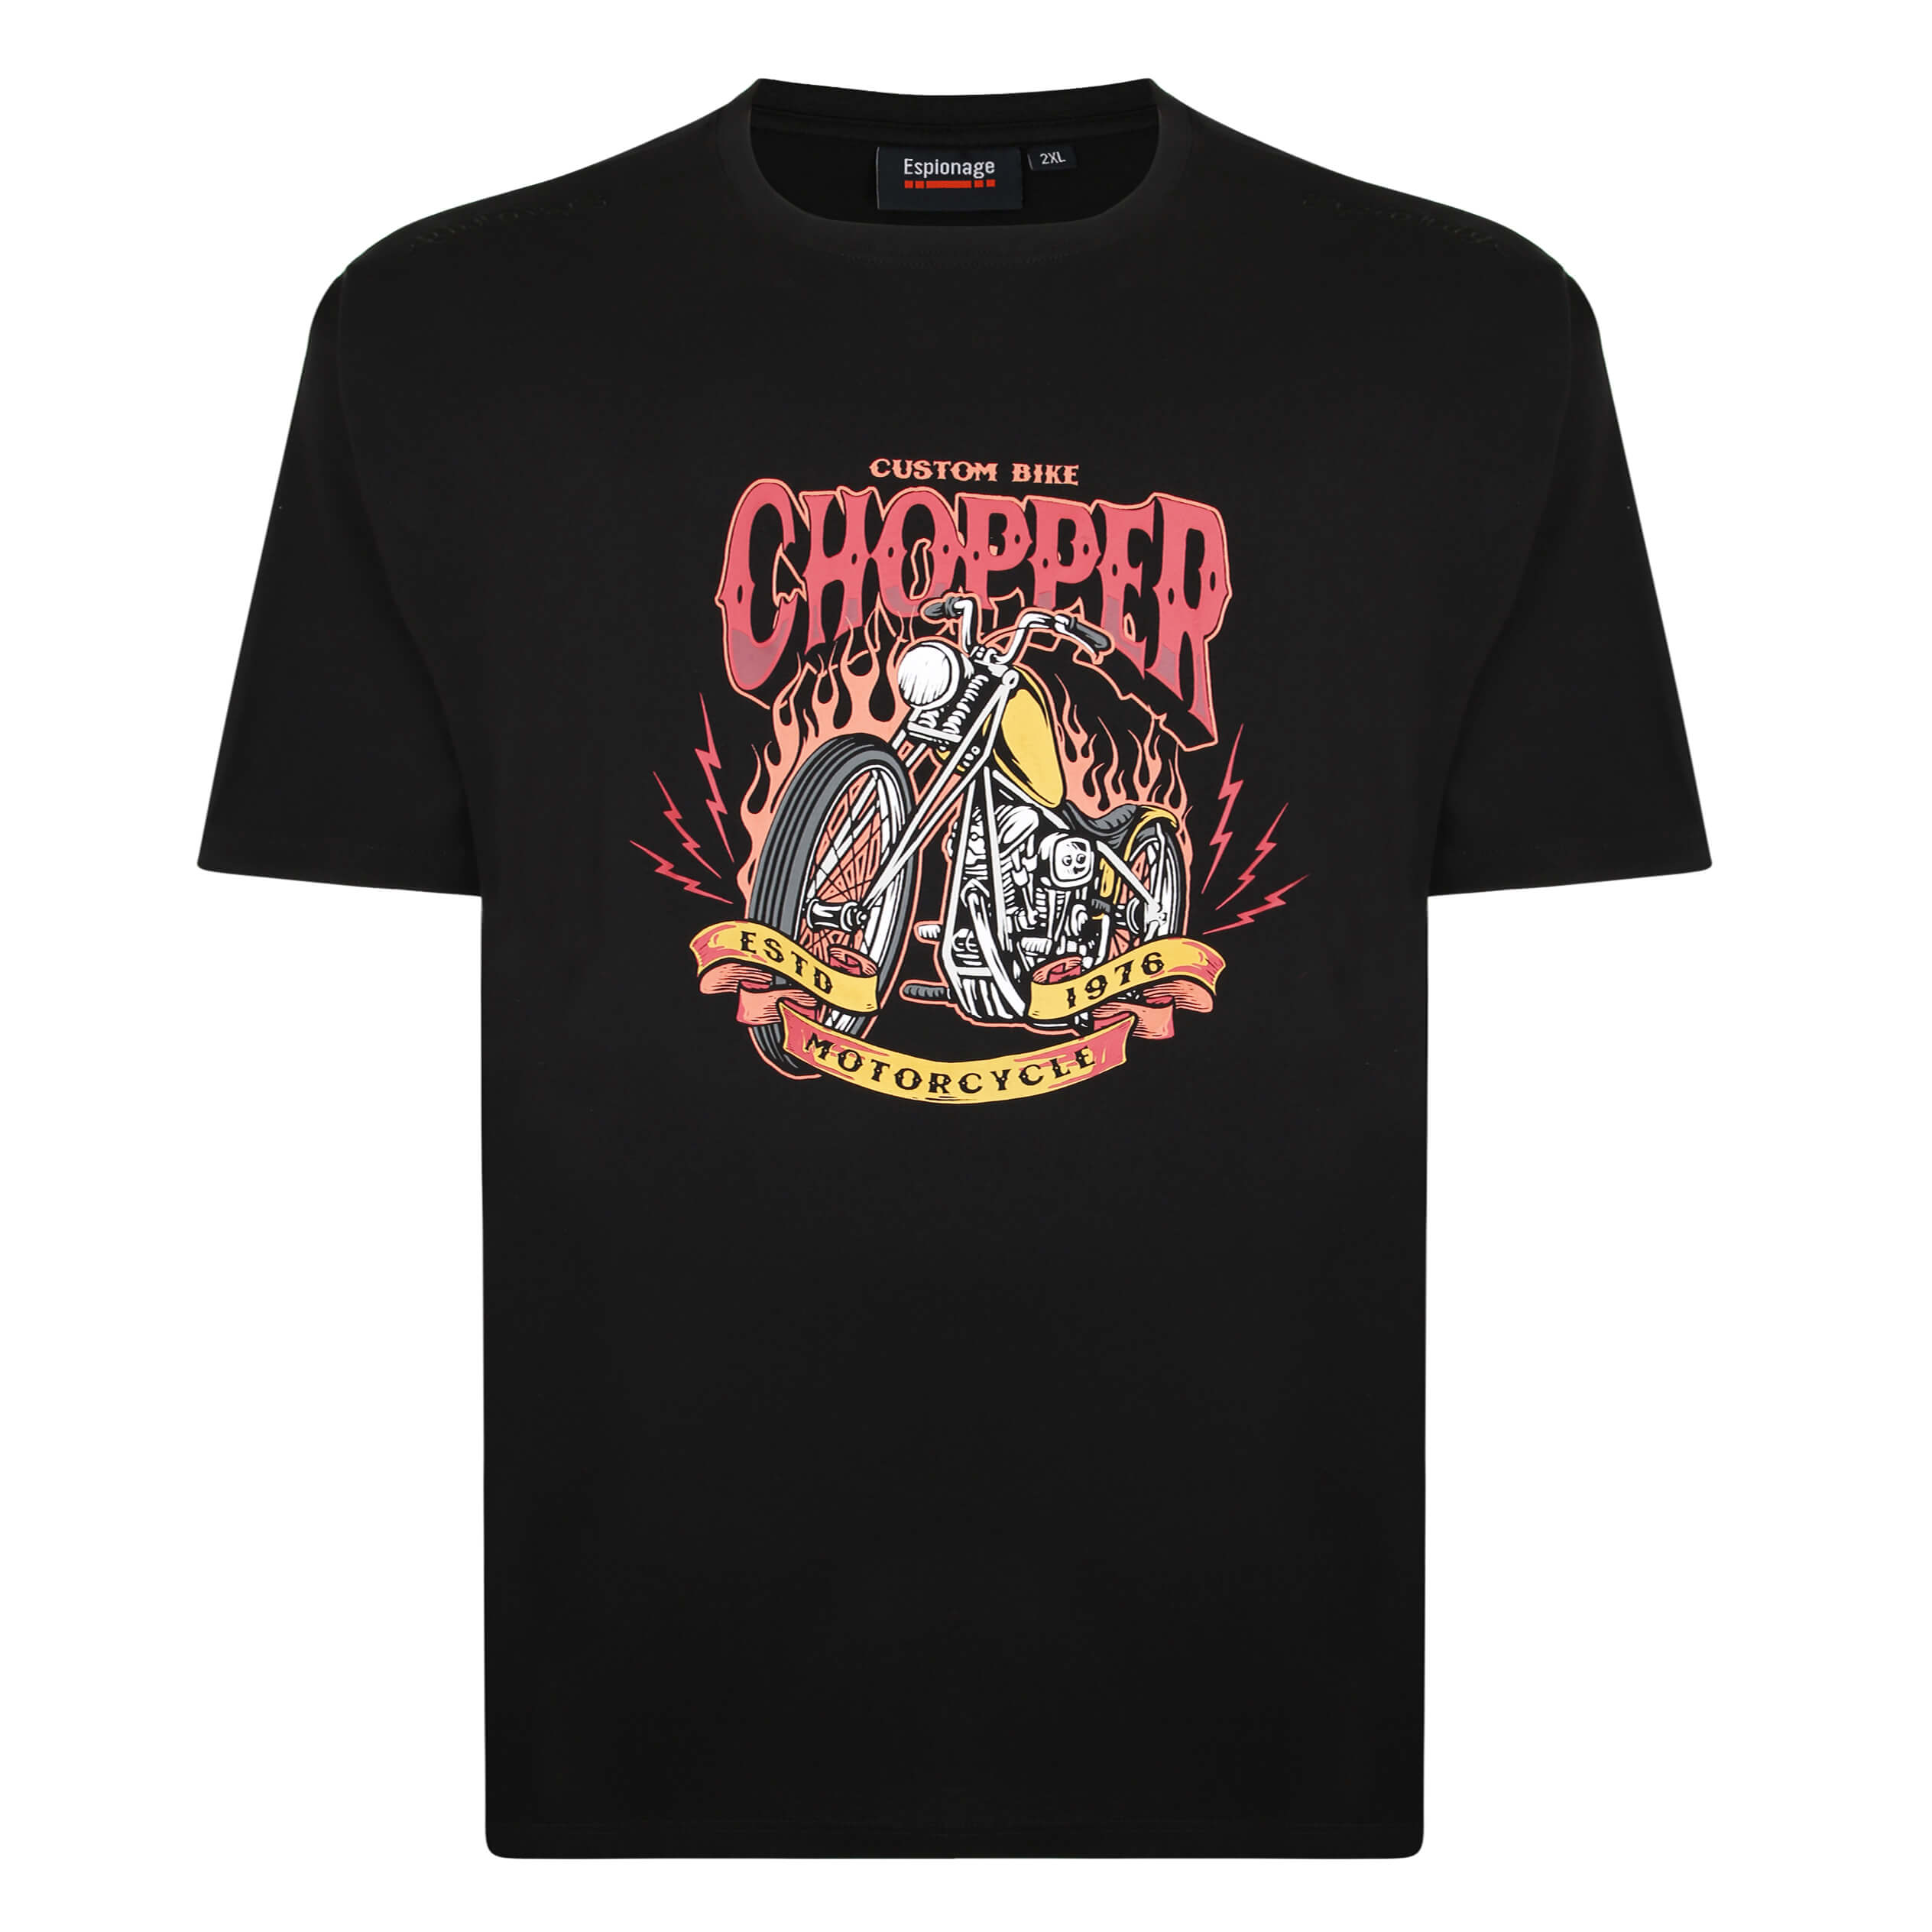 Espionage Chopper Tee Shirt